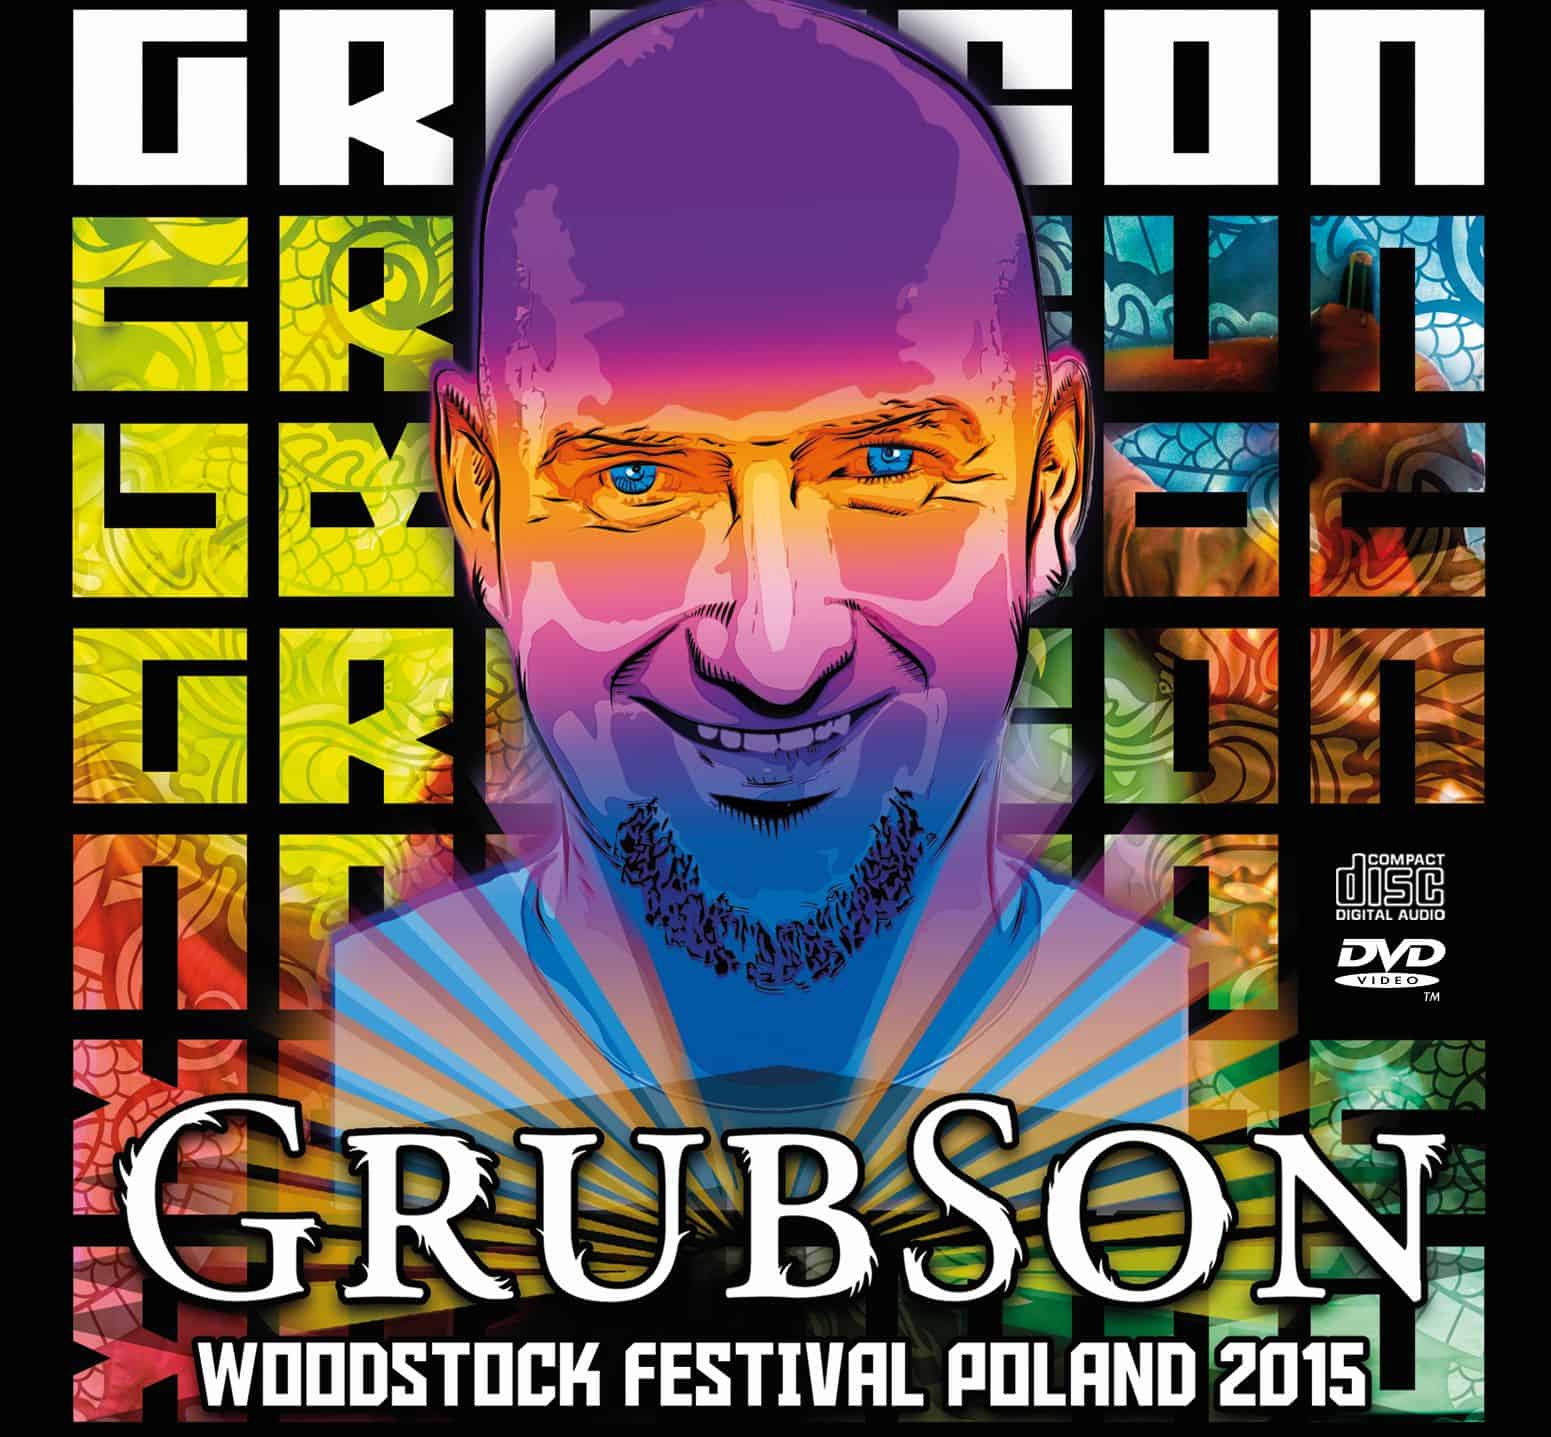 DVD+CD Grubsona z Przystanku Woodstock